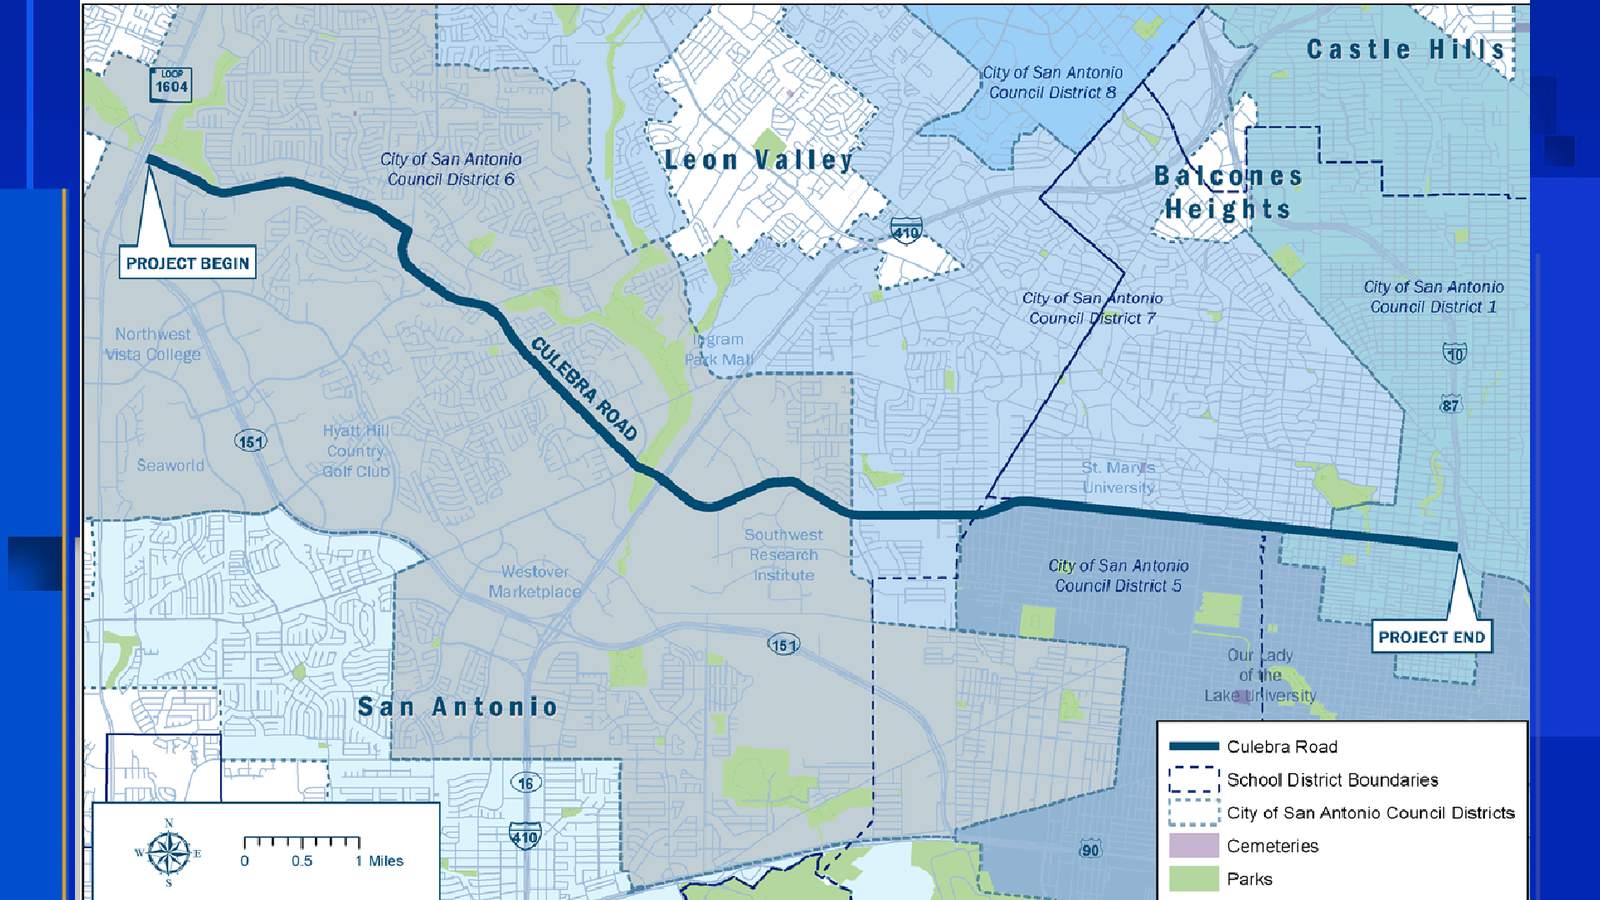 San Antonio’s Transportation Department asks for input to plan Culebra Road